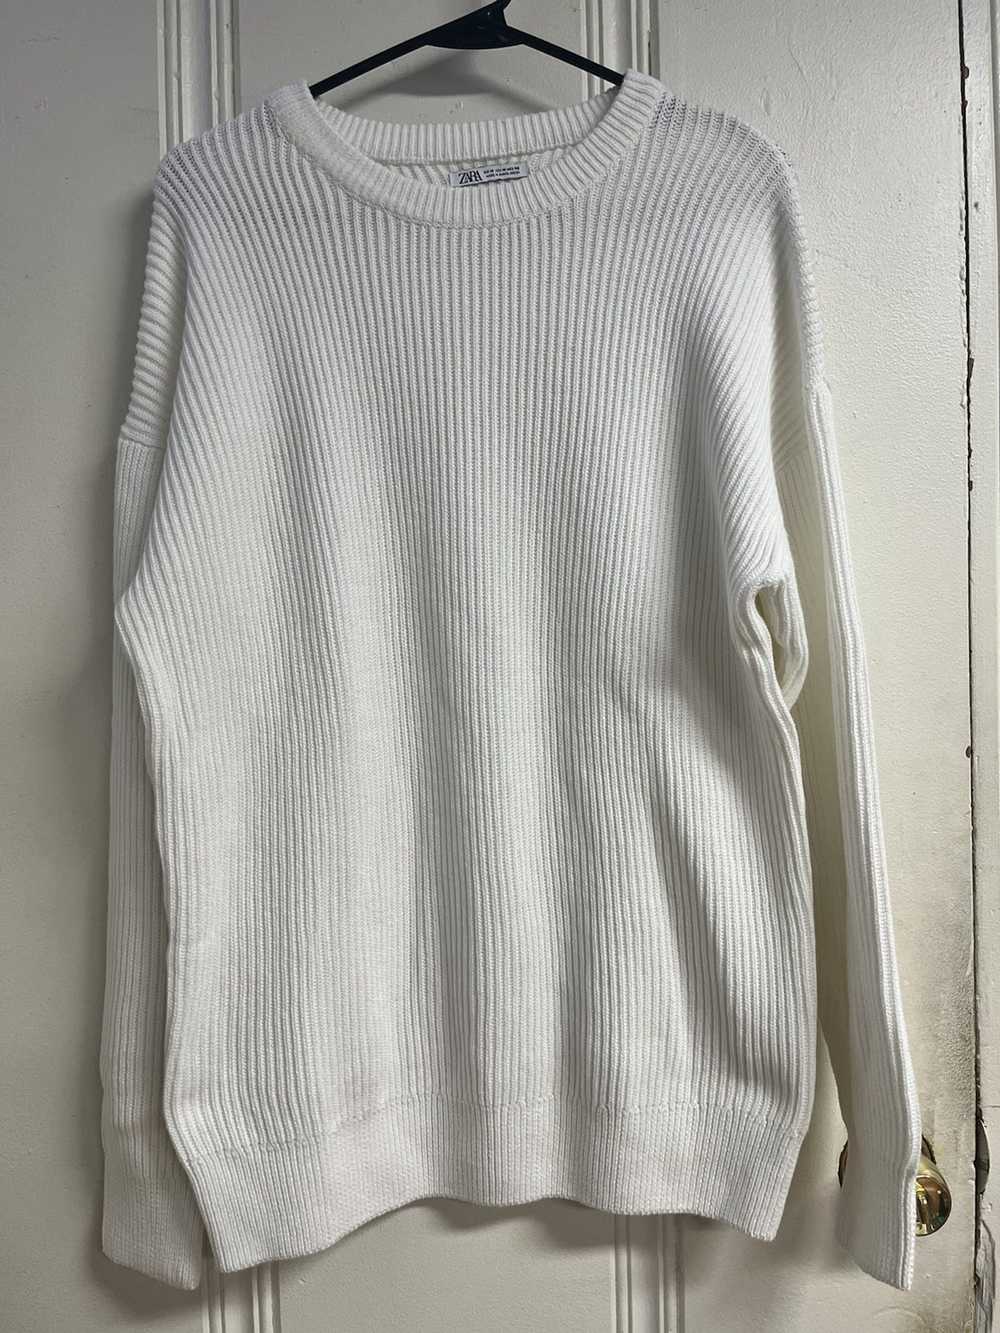 Zara Ribbed Sweater - image 1